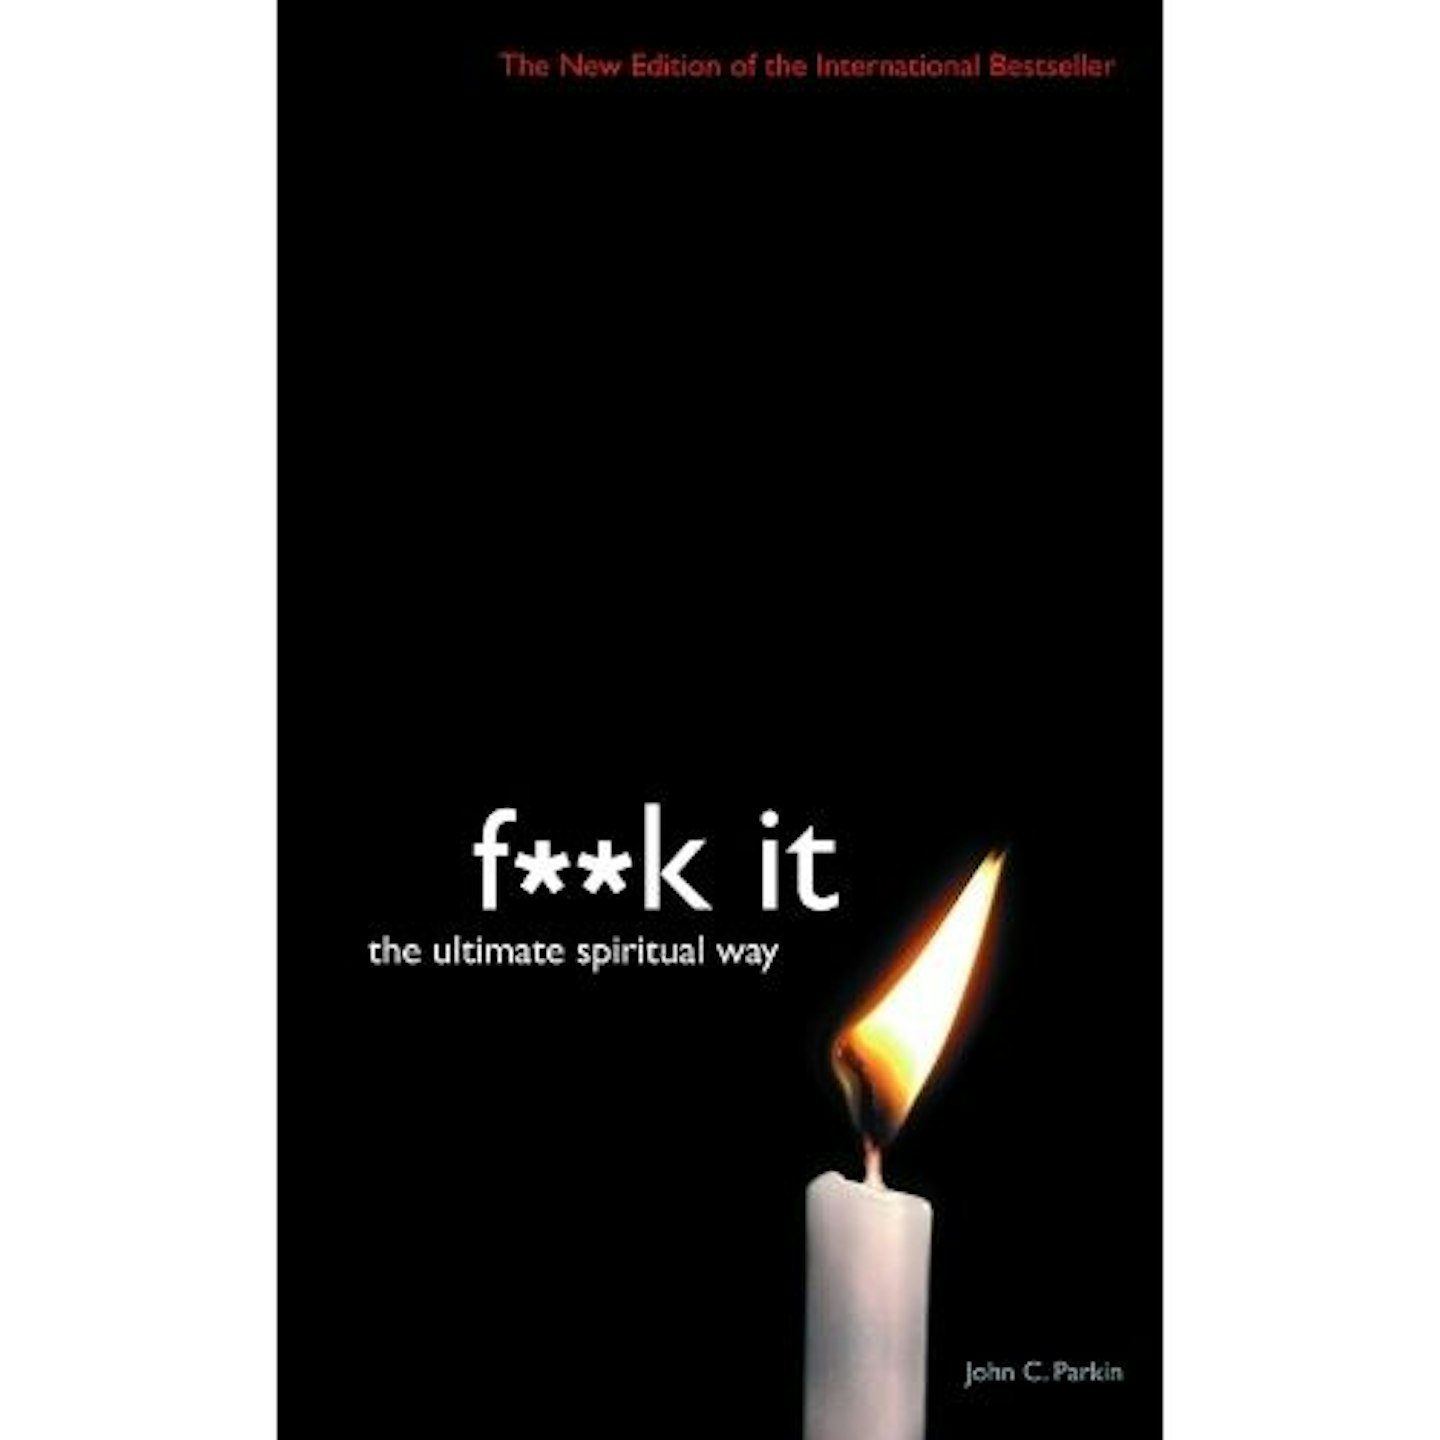 F**k it: The Ultimate Spiritual Way by John C. Parkin